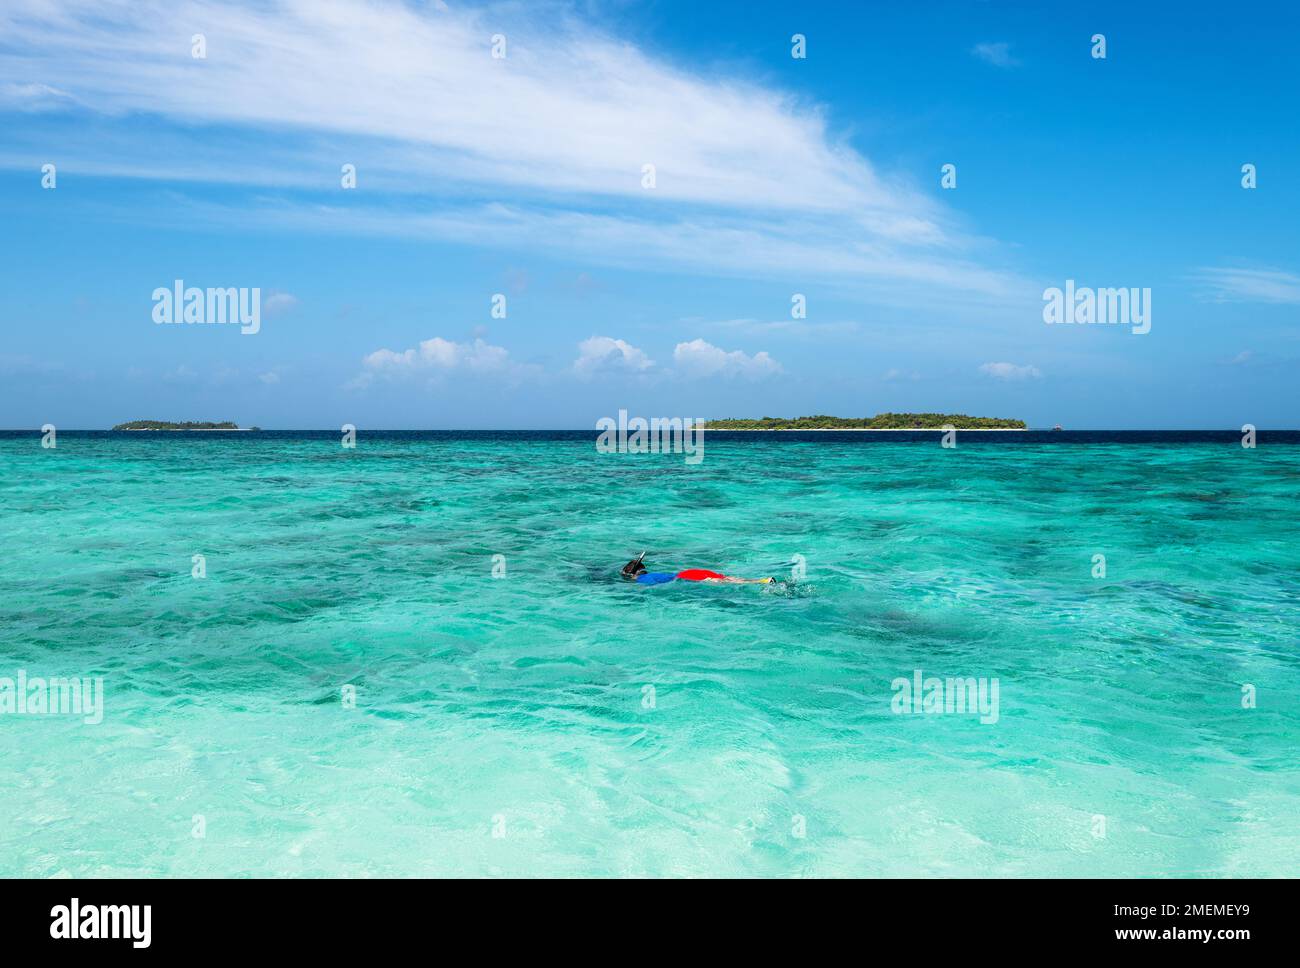 Homme snorkeling dans l'océan Indien, Atoll Baa, Maldives Banque D'Images